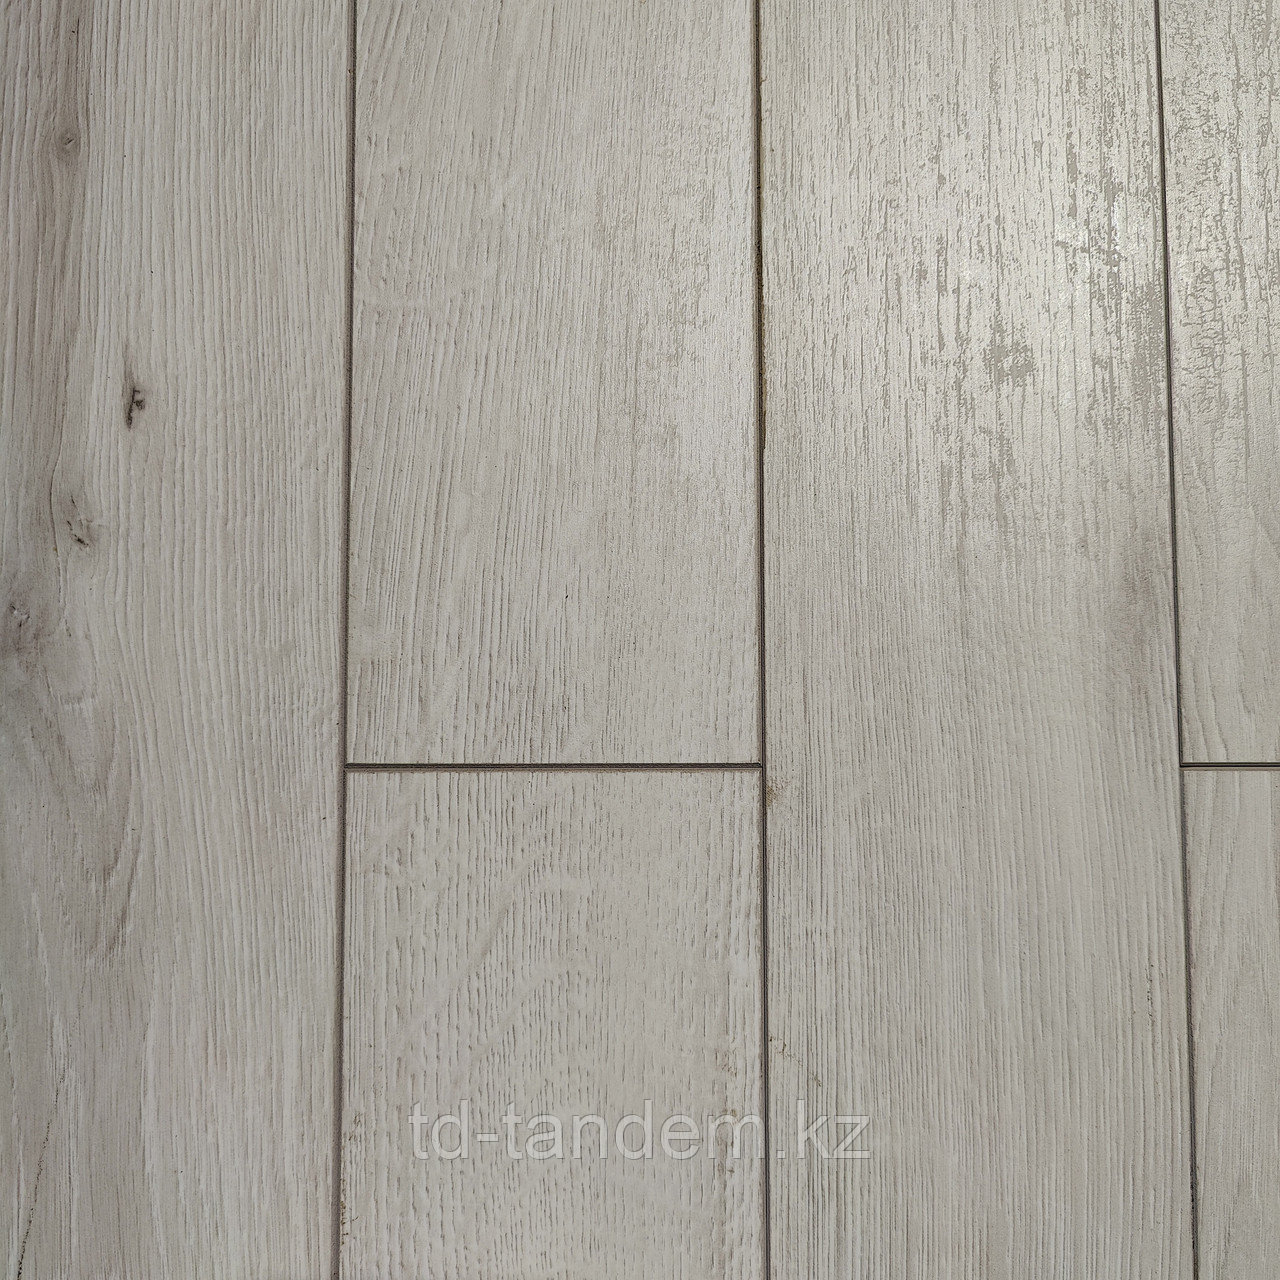 Ламинат Kronopol Flooring CUPRUM 4926 Дуб Римини 33класс/12мм, 4V Фаска (узкая доска)